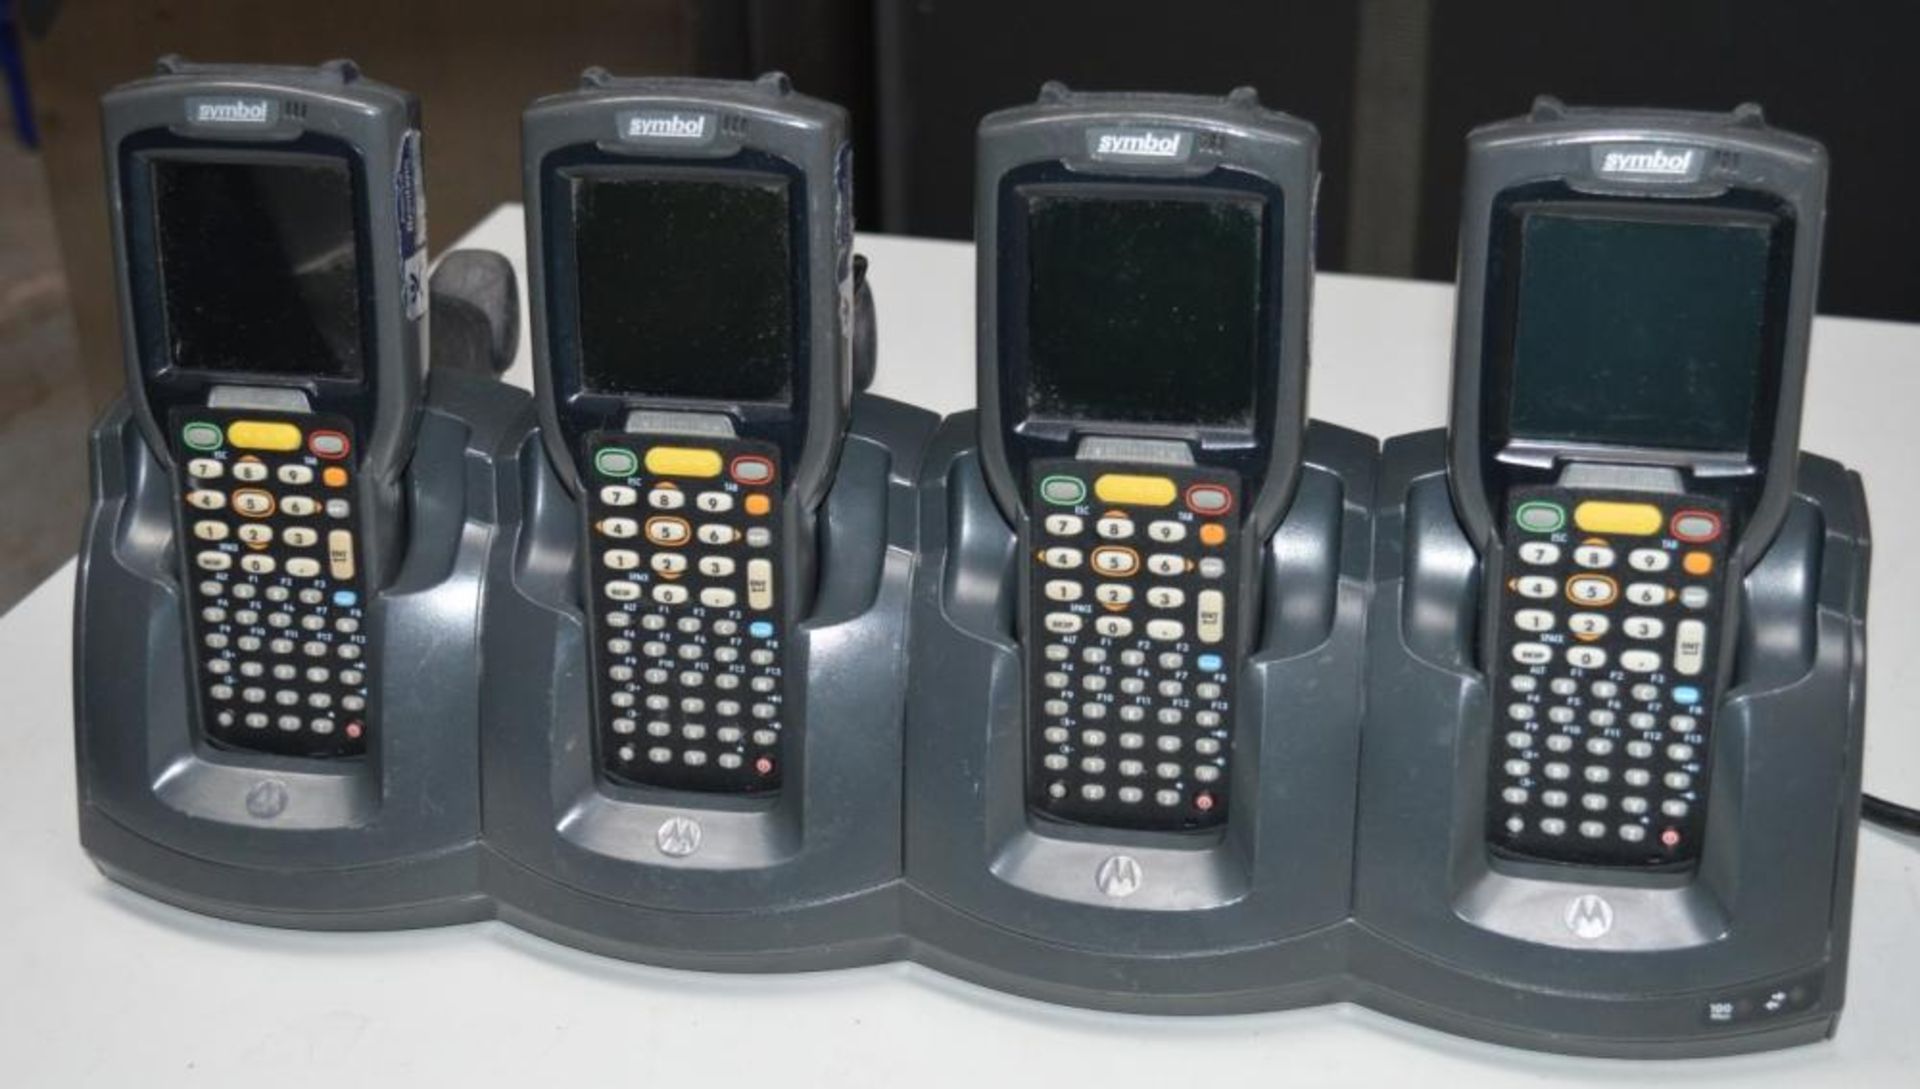 4 x Motorola Symbol MC3090 Handheld Barcode Scanners - Mobile Computer PDA - Includes Charging Dock, - Image 2 of 7